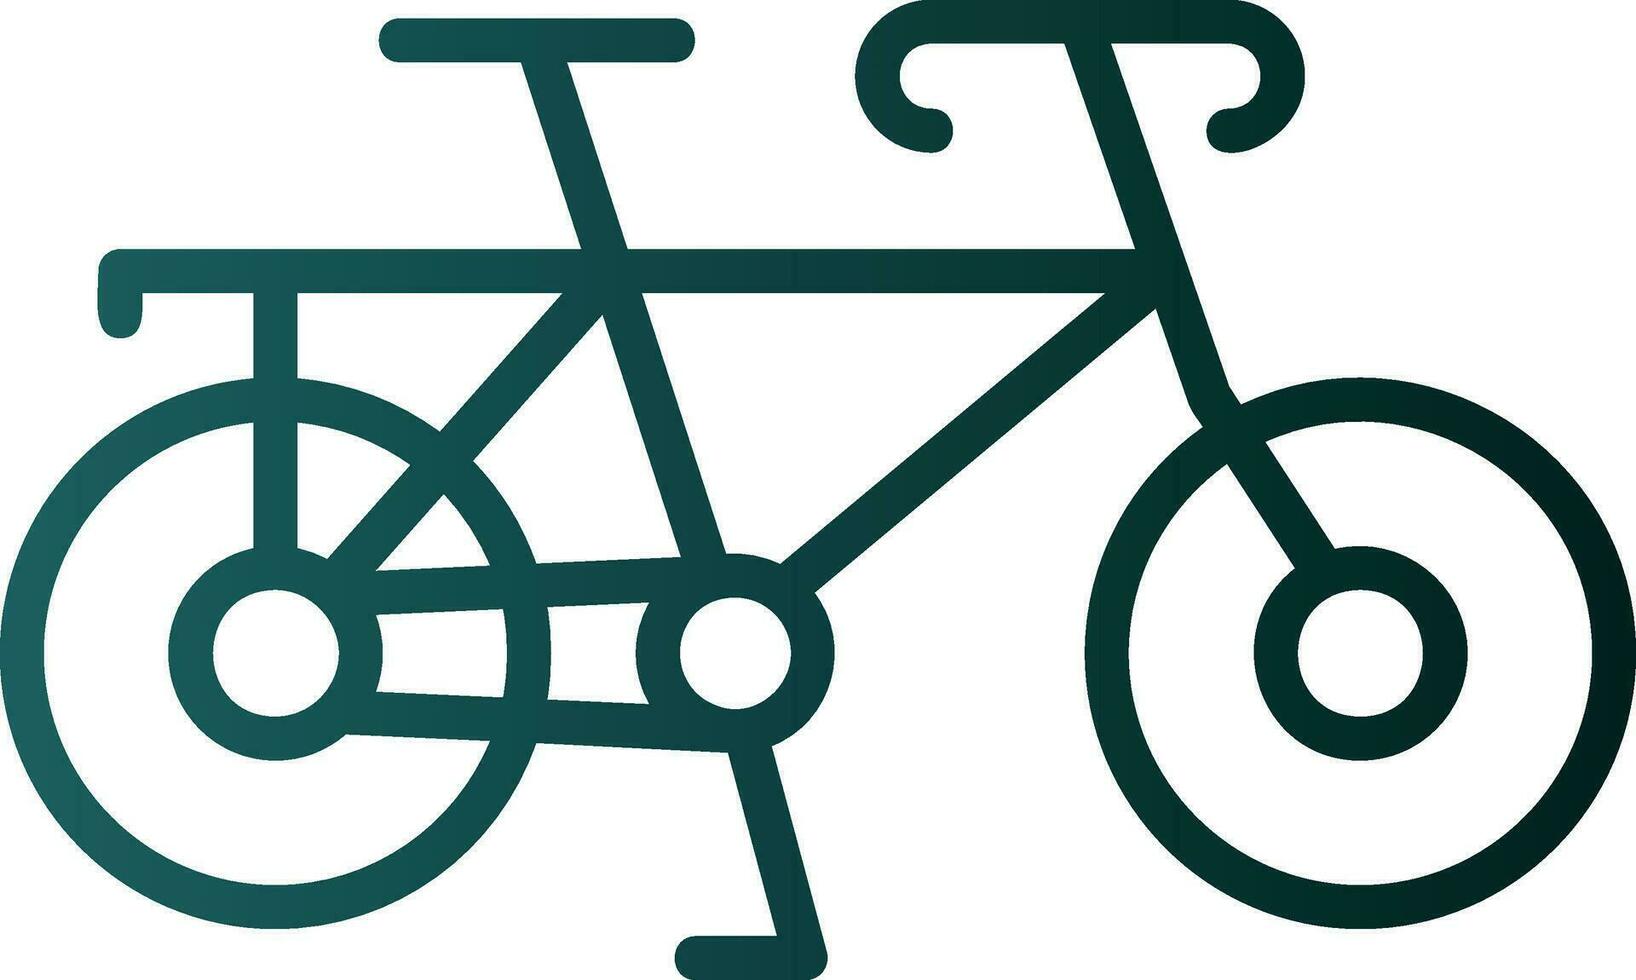 Bicycle Vector Icon Design